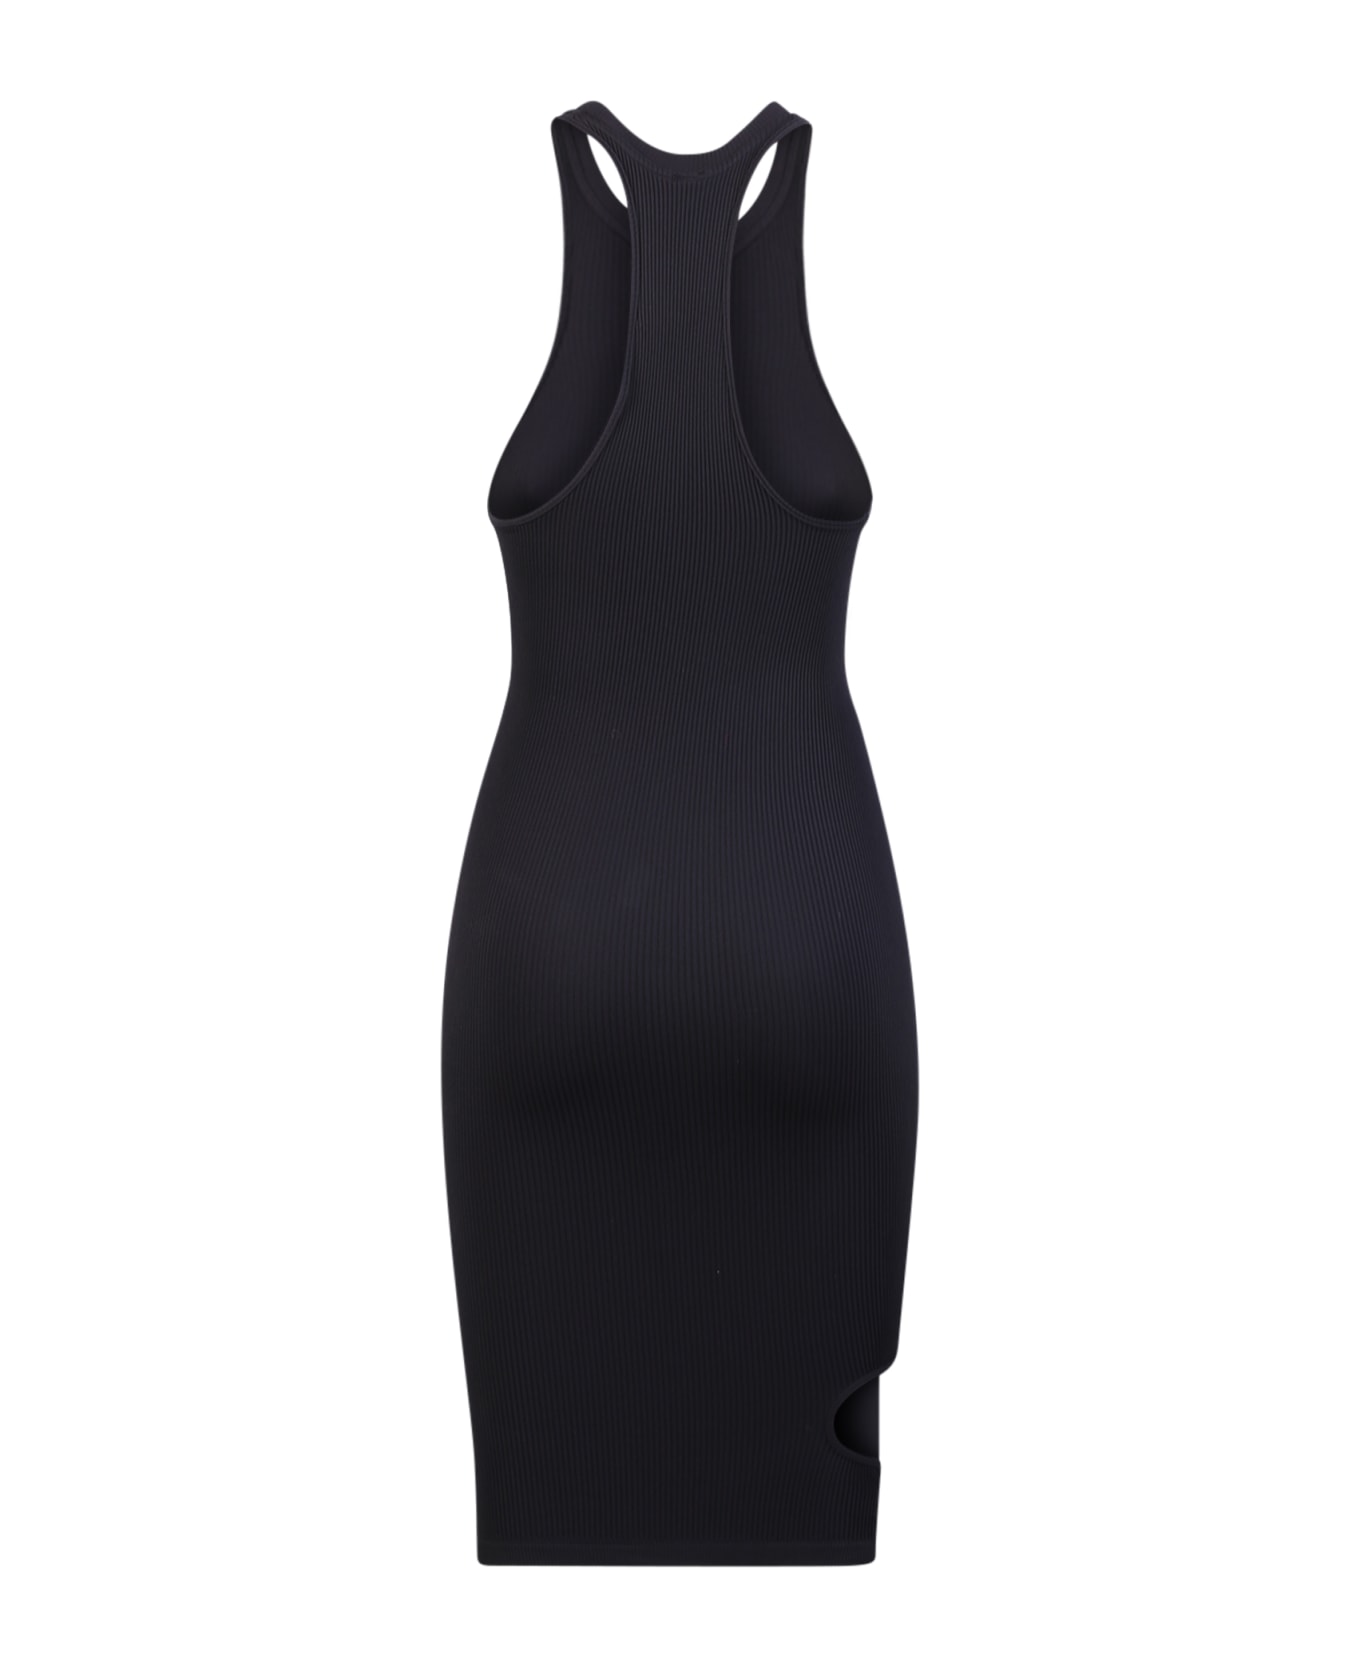 ANDREĀDAMO Black Close-fitting Stretch Dress - Black